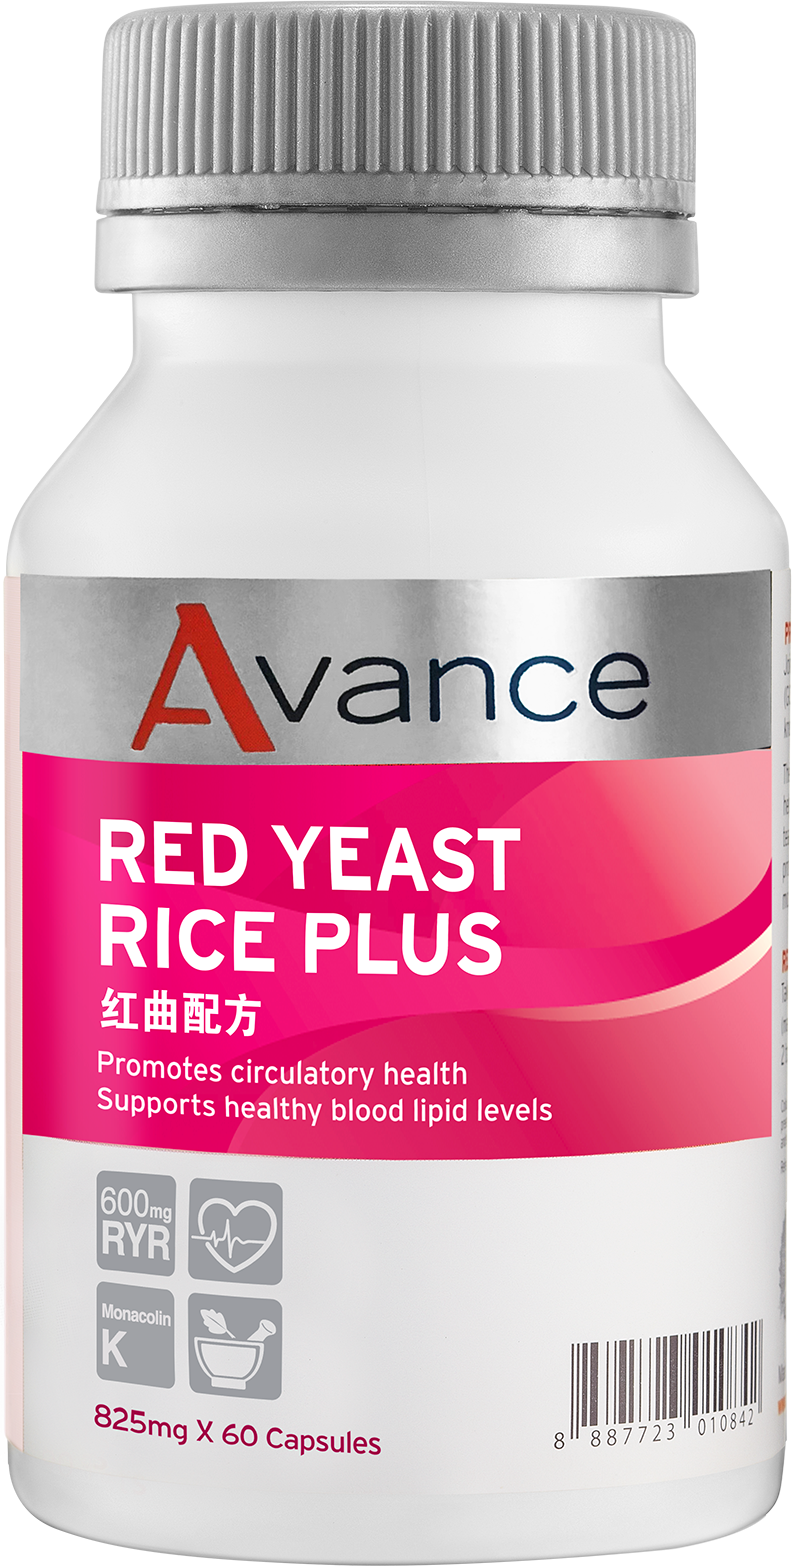 Red Yeast Rice Plus